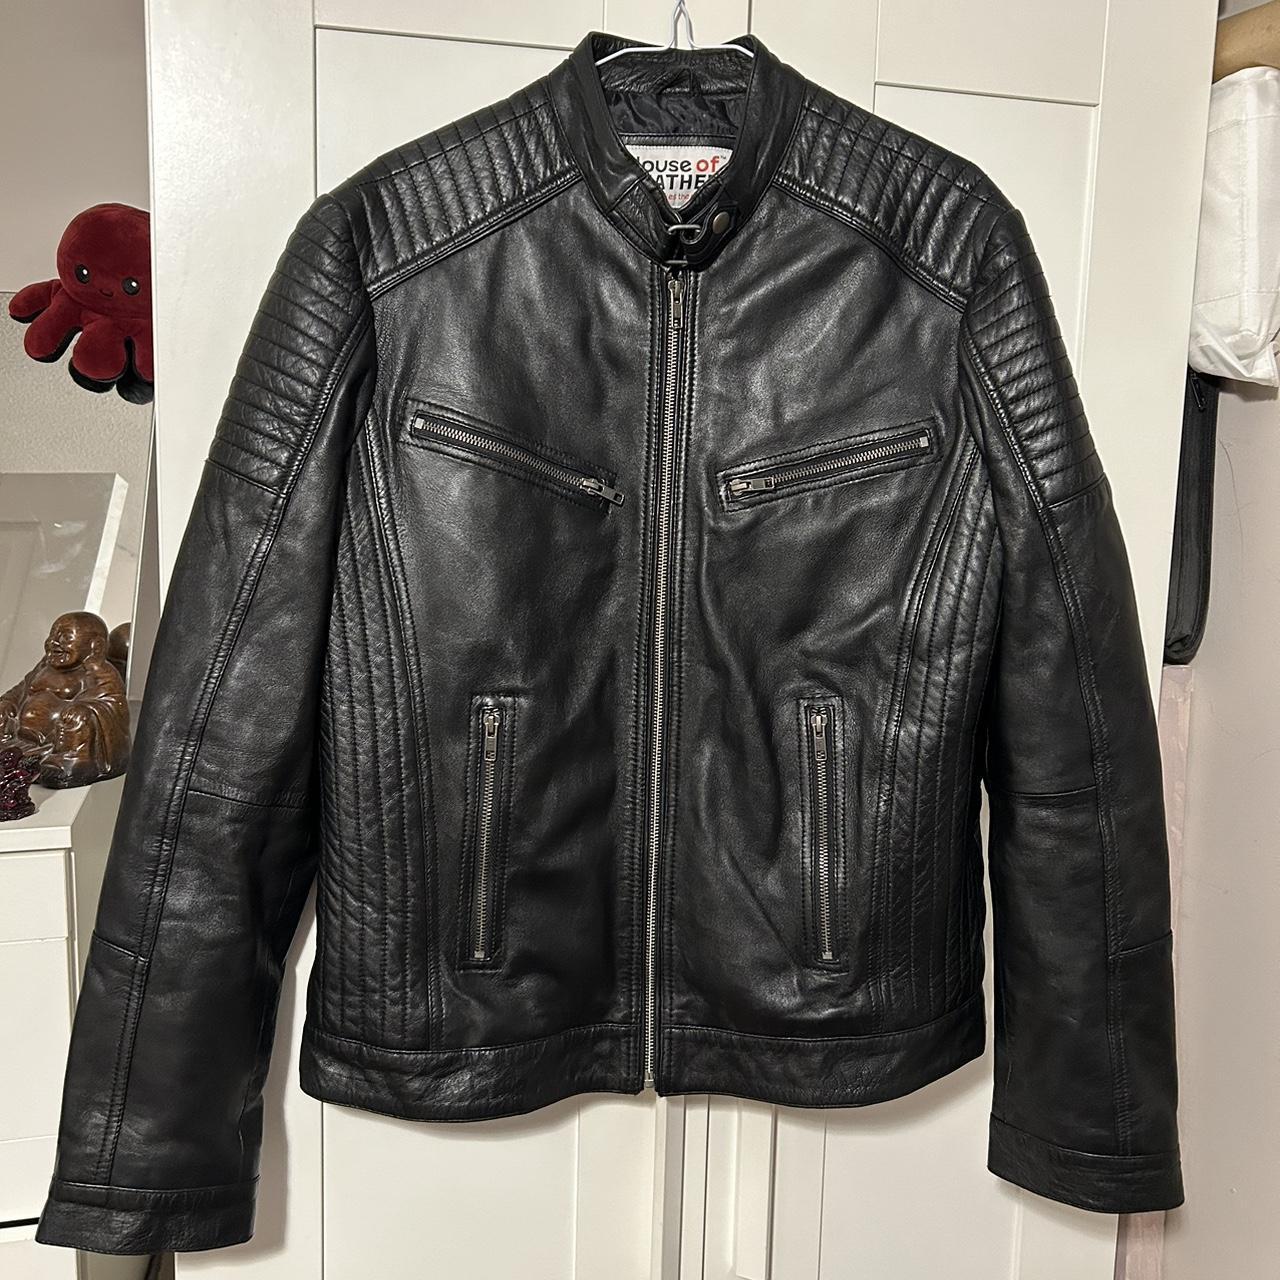 REAL Leather Black Biker Jacket from House of... - Depop